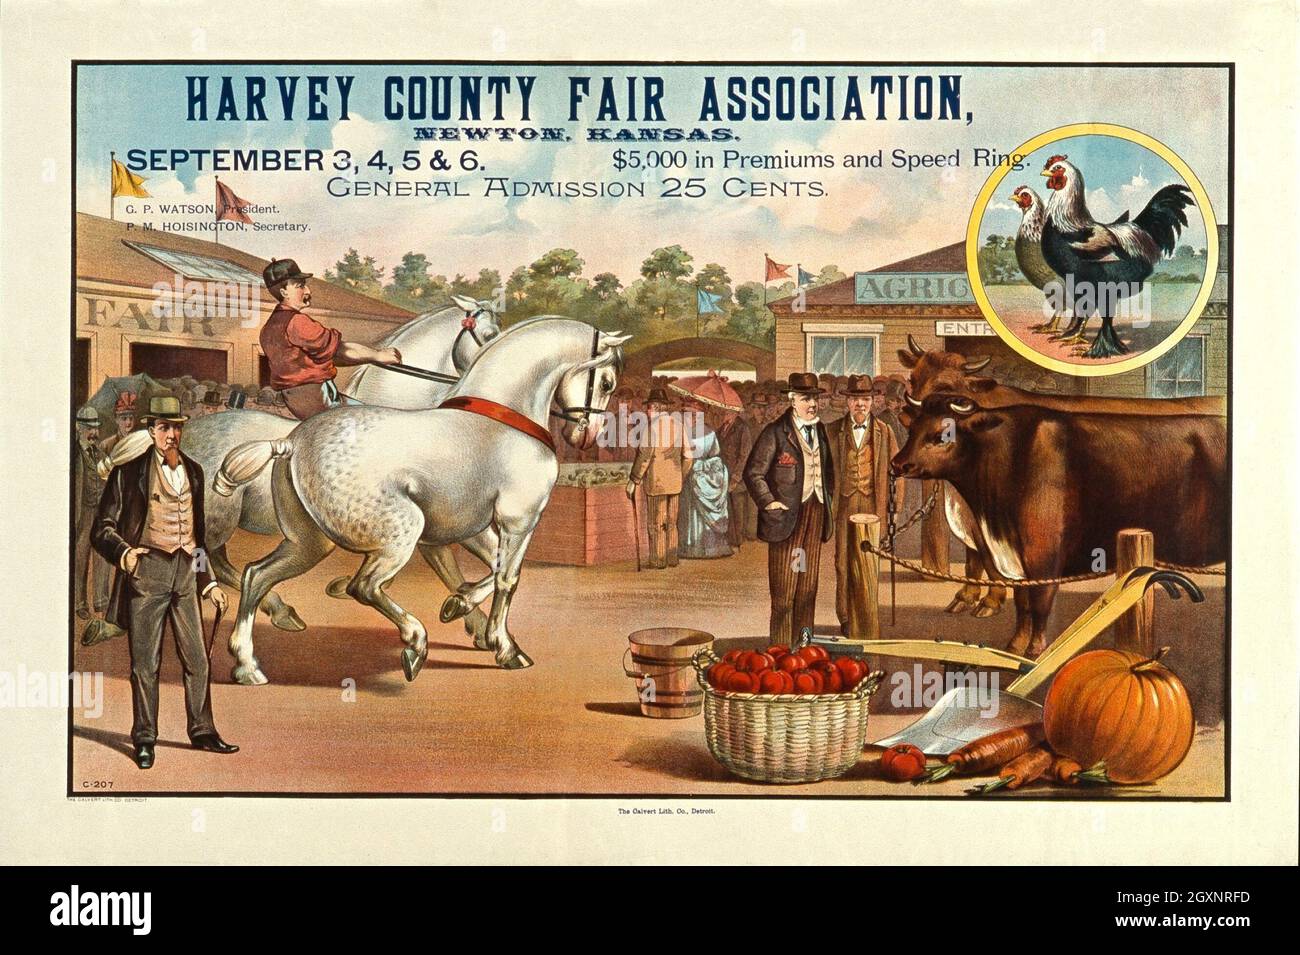 Harvey County Fair Association Foto Stock